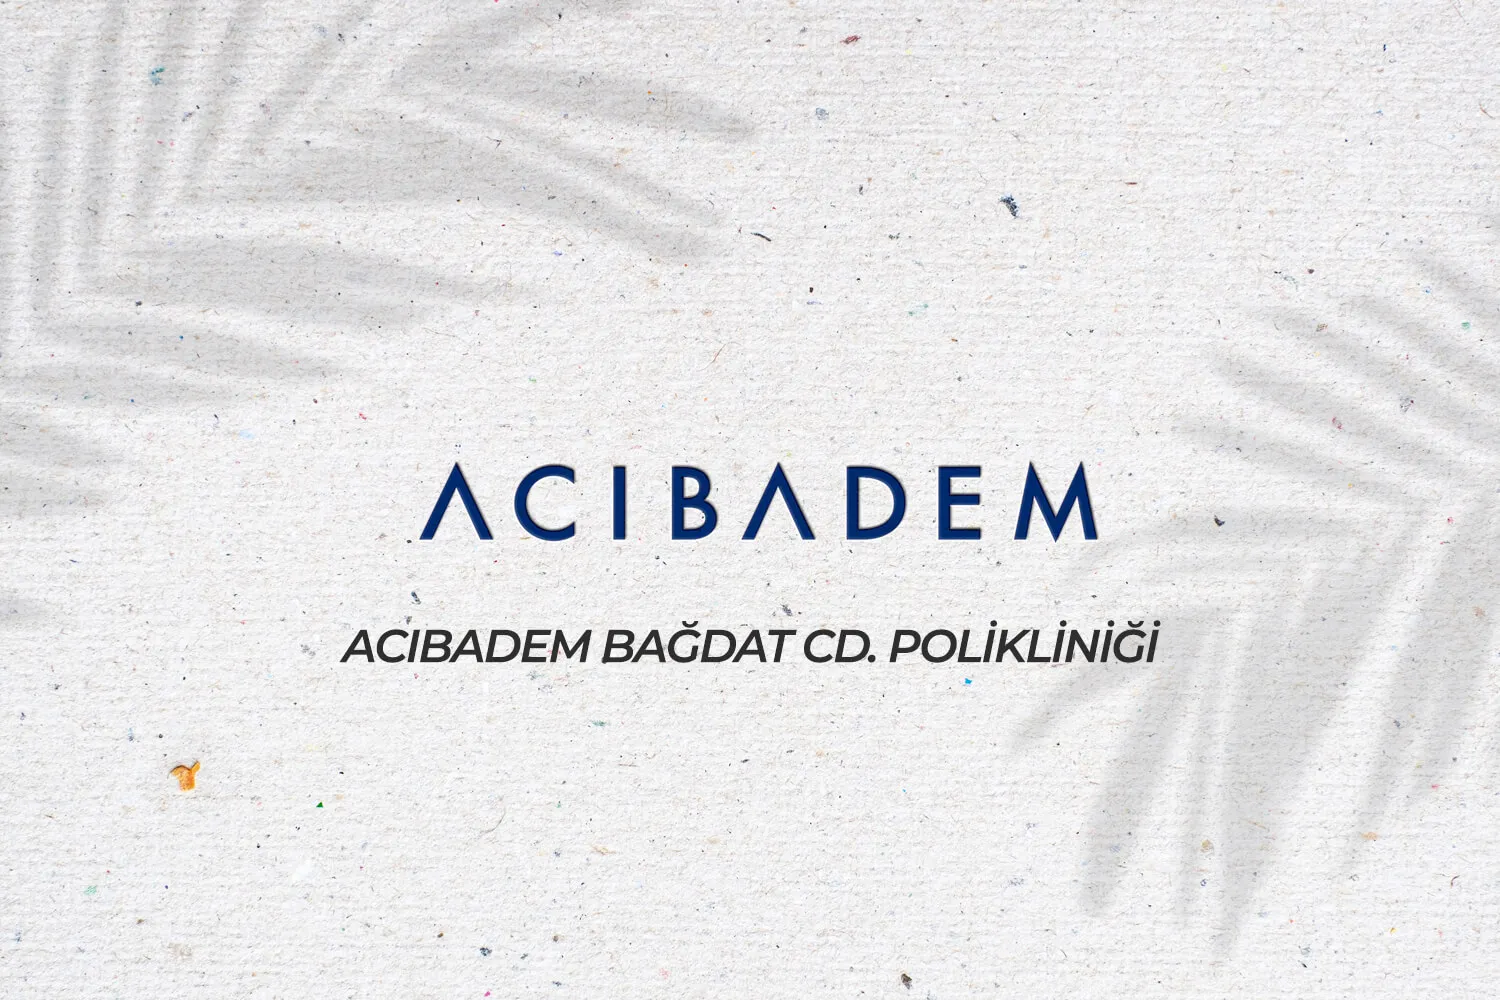 ACIBADEM BAĞDAT CD. POLİKLİNİĞİ